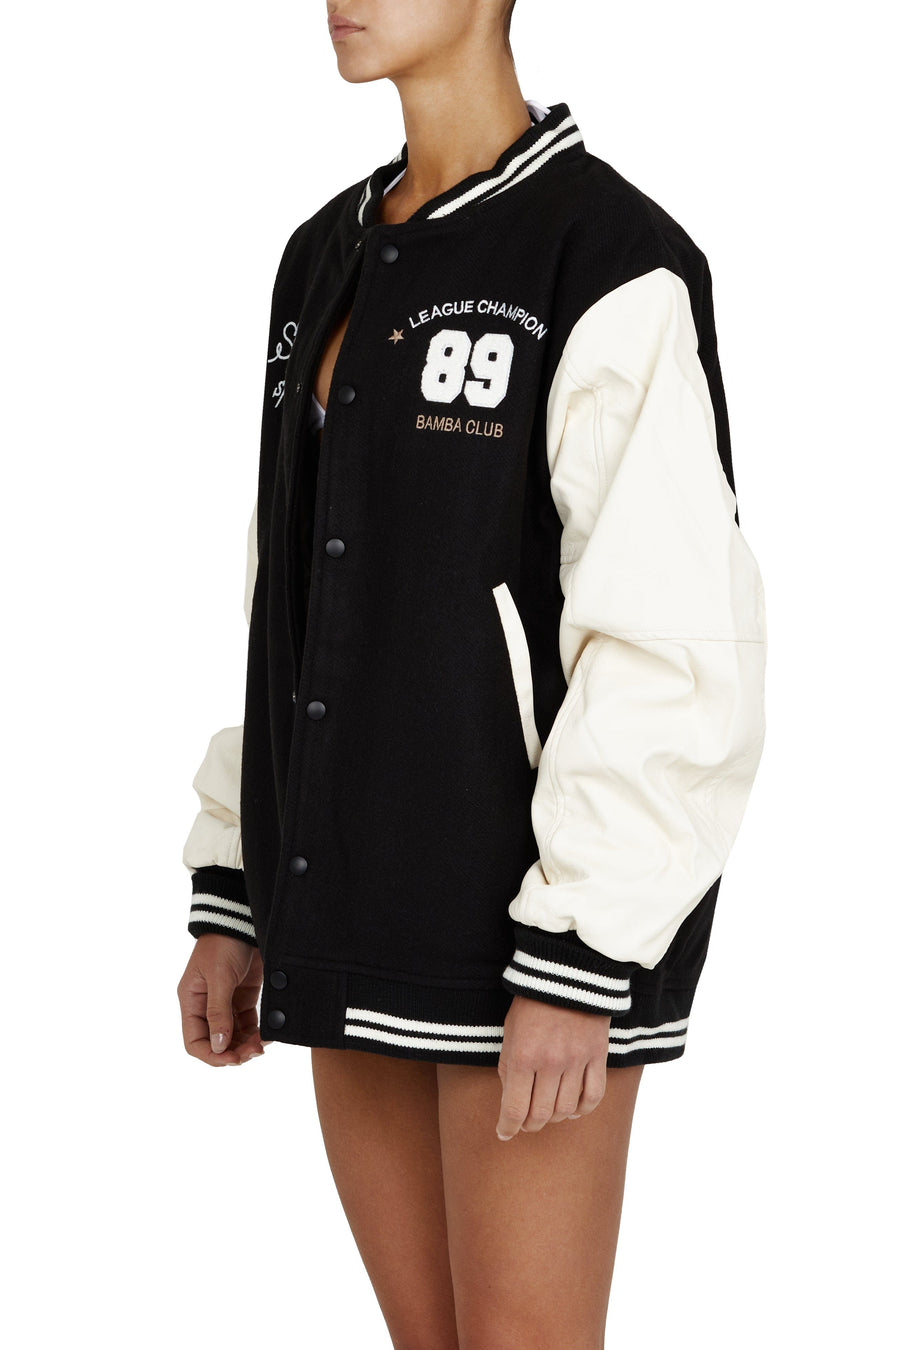 BAMBA LEAGUE 89’ Varsity Jacket  -  CLOTHING  -  B Ā M B A S W I M